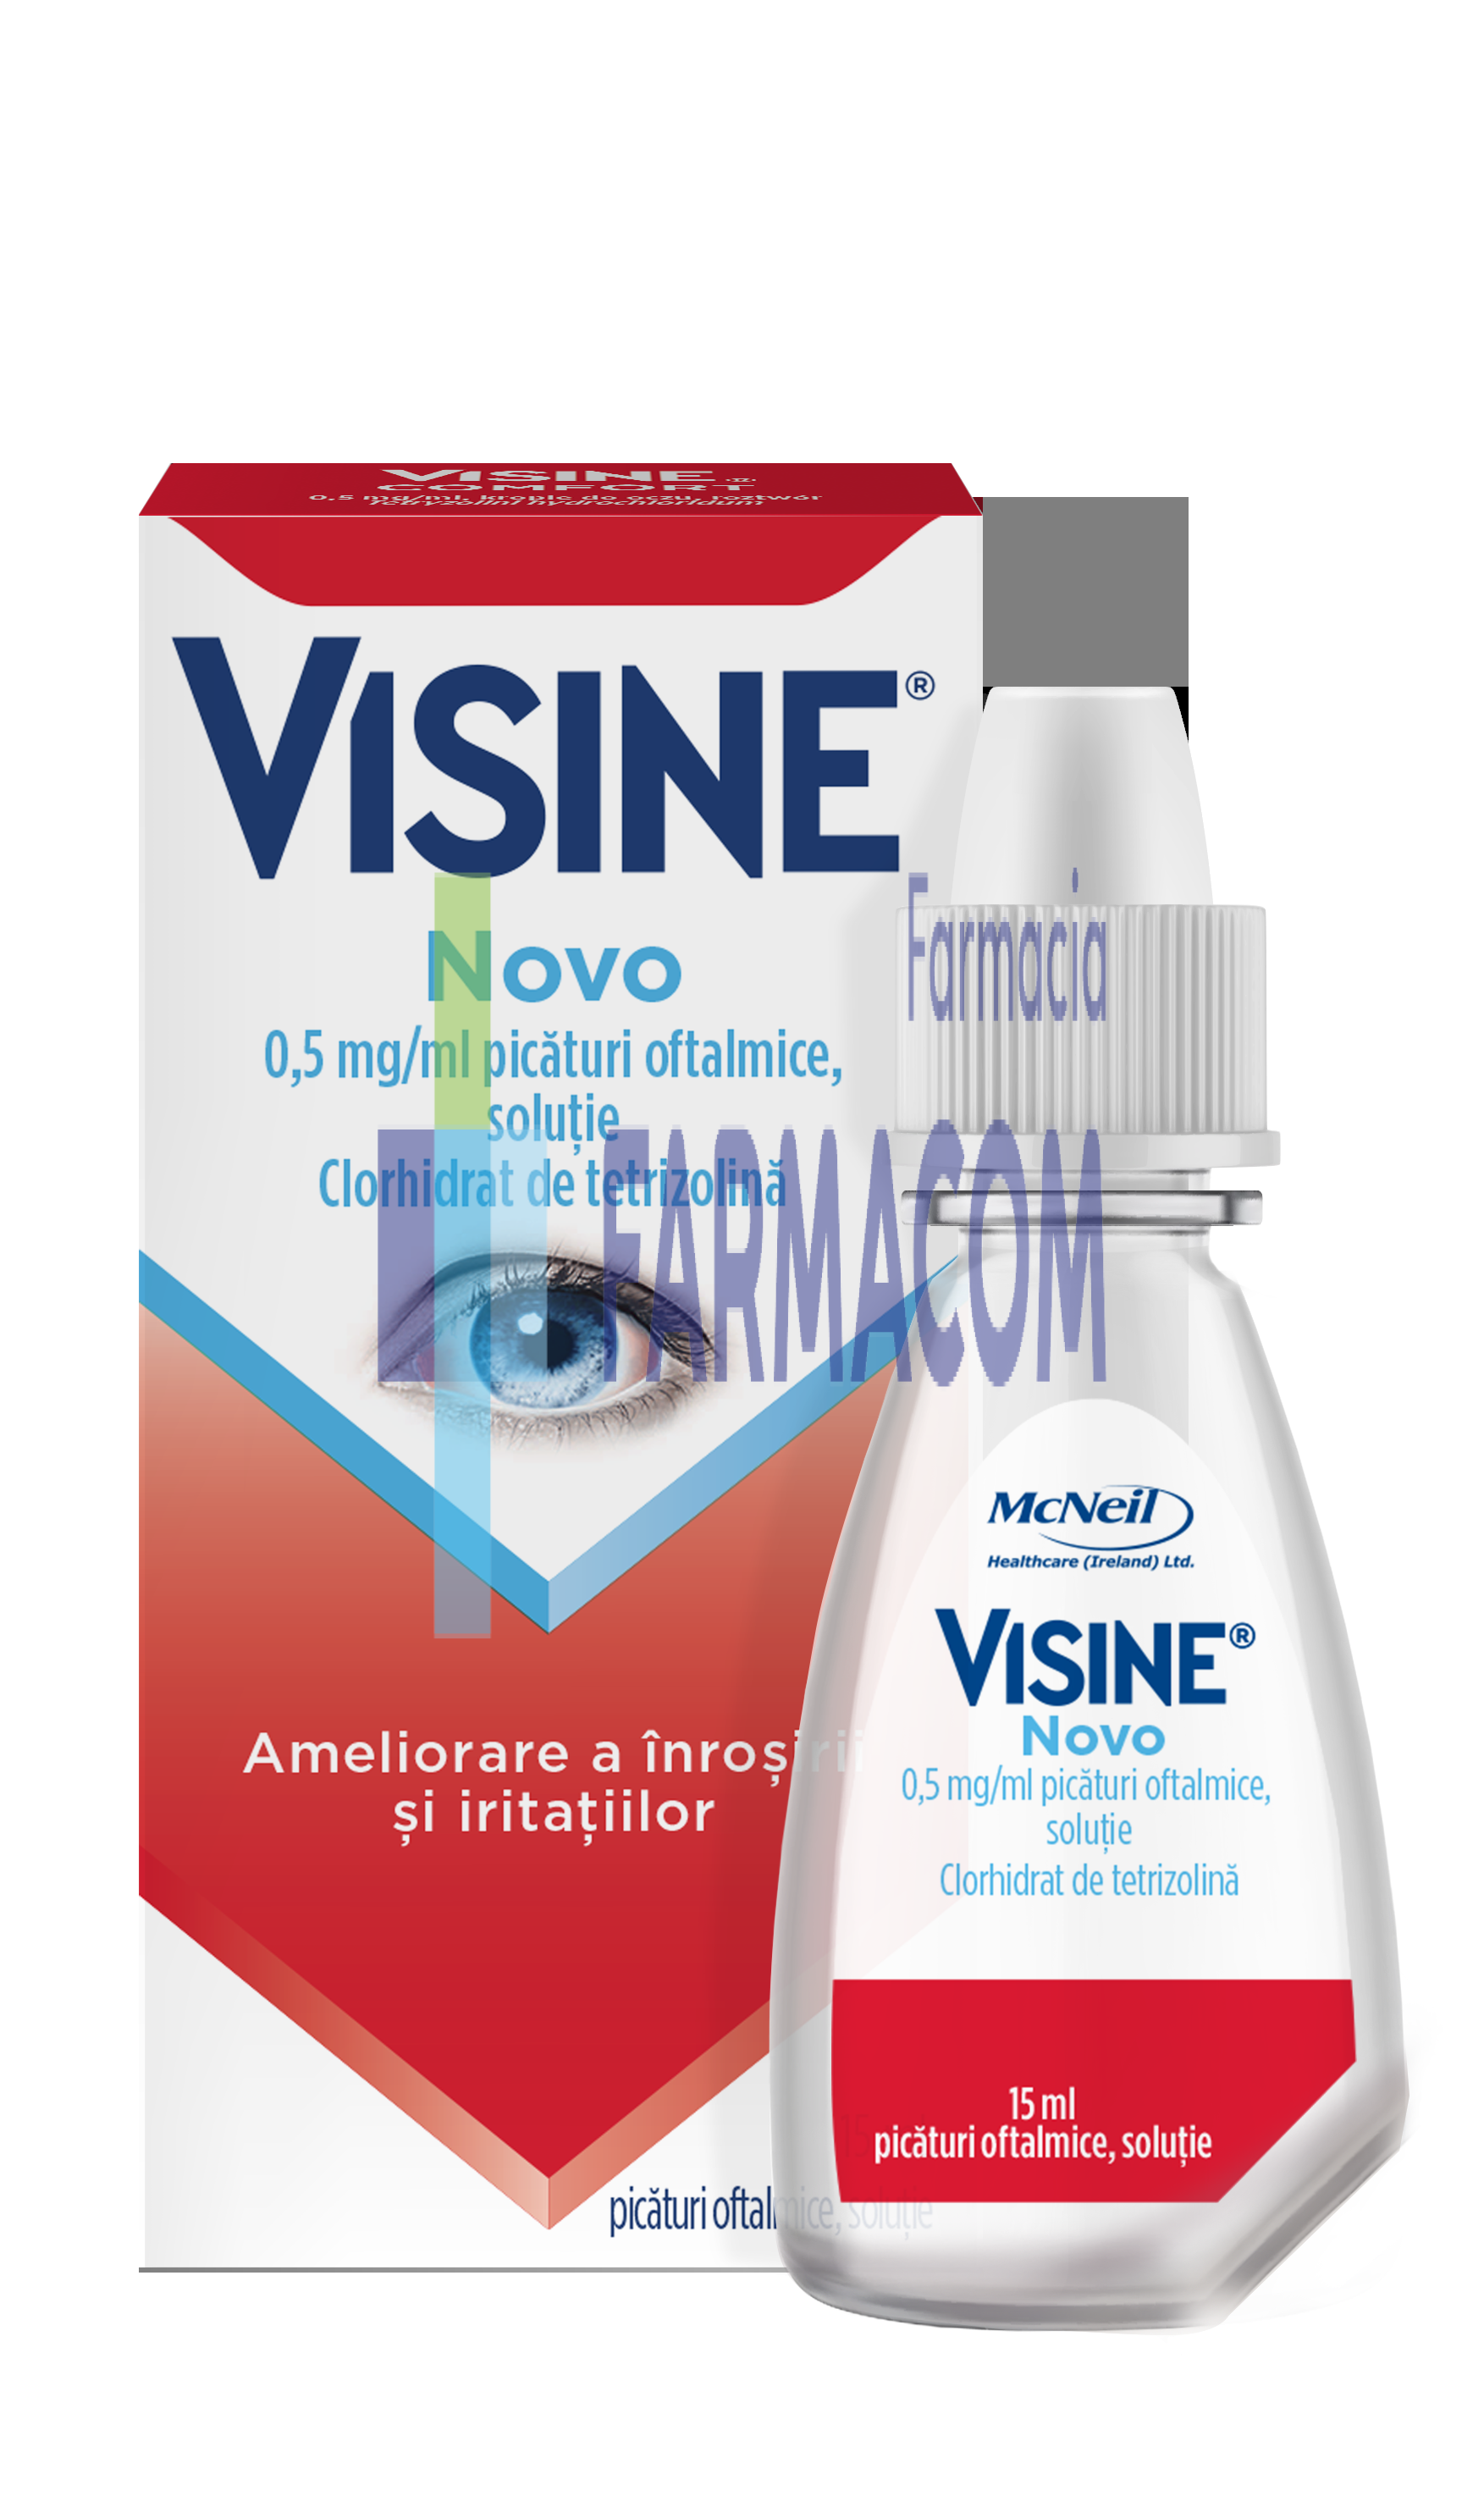 Medicamente fara reteta (OTC) - Visine Novo, 0.5 mg/ml, picaturi oftalmice, Mcneil, farmacom.ro